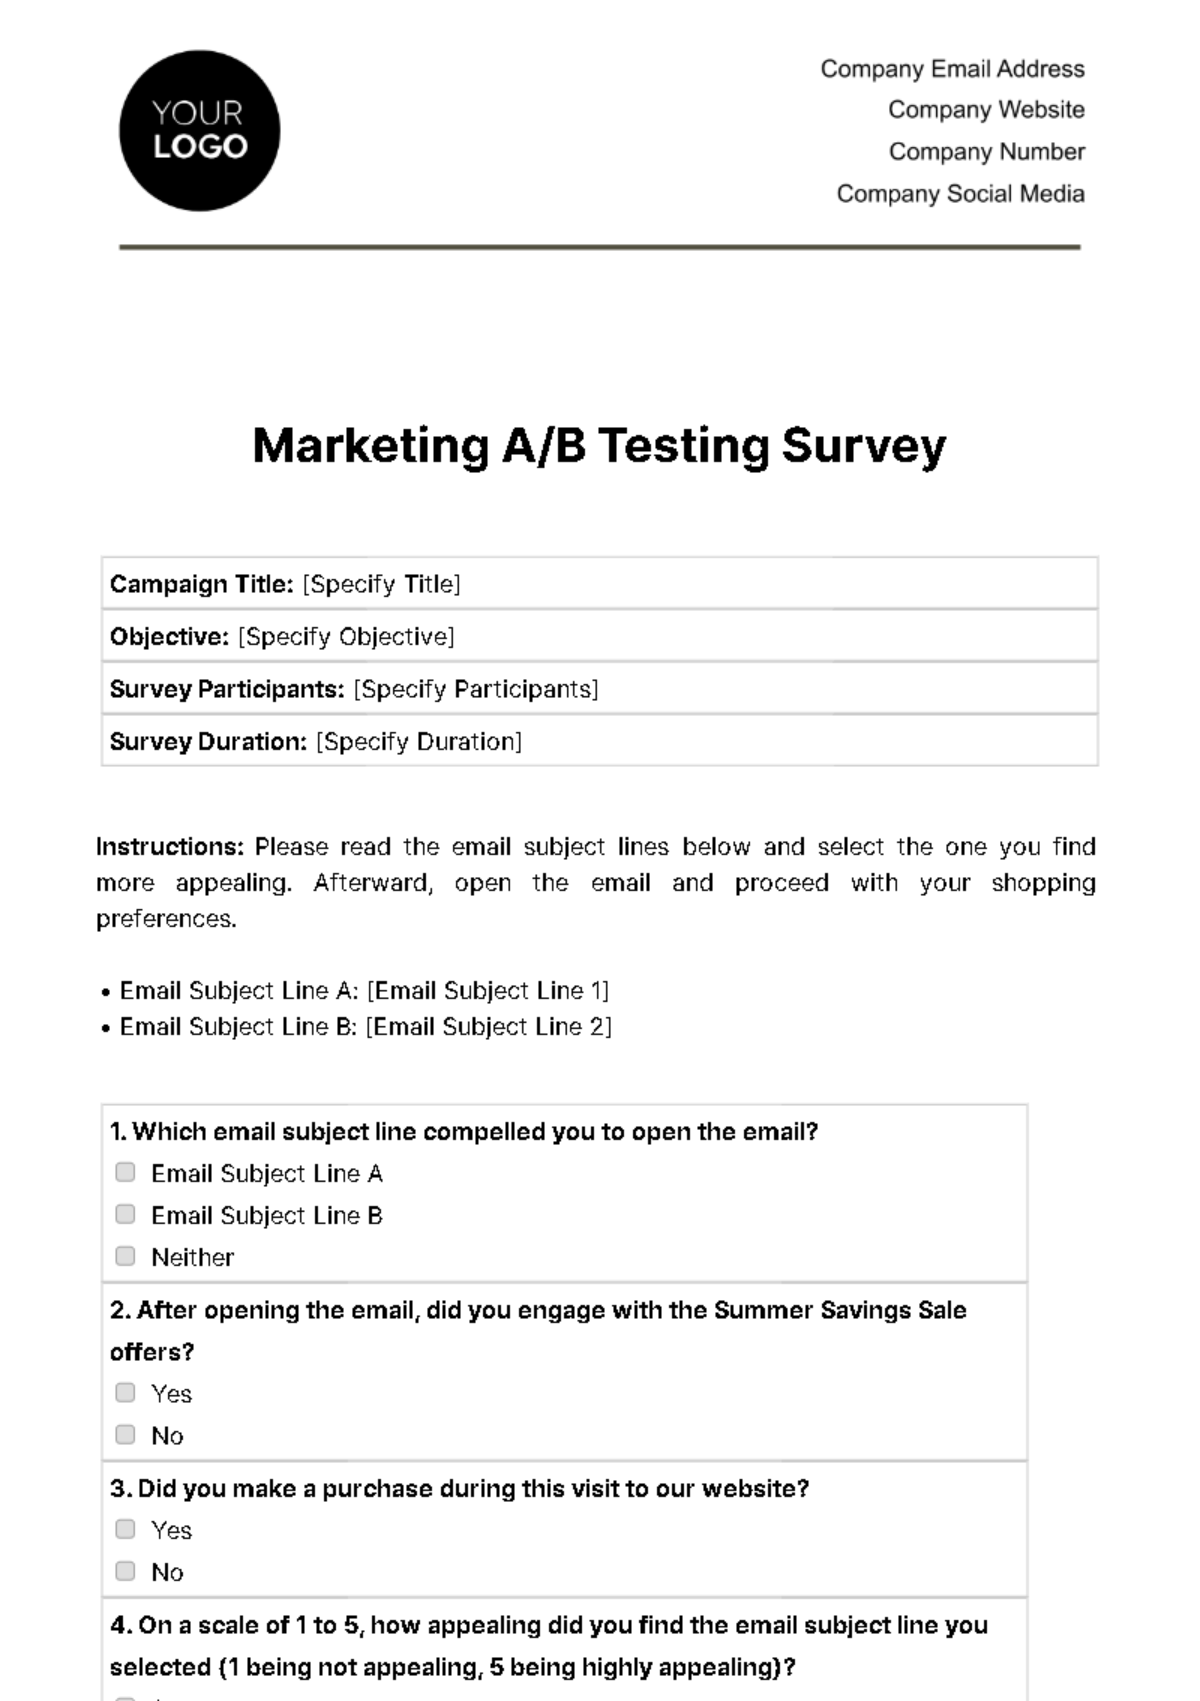 Marketing A/B Testing Survey Template